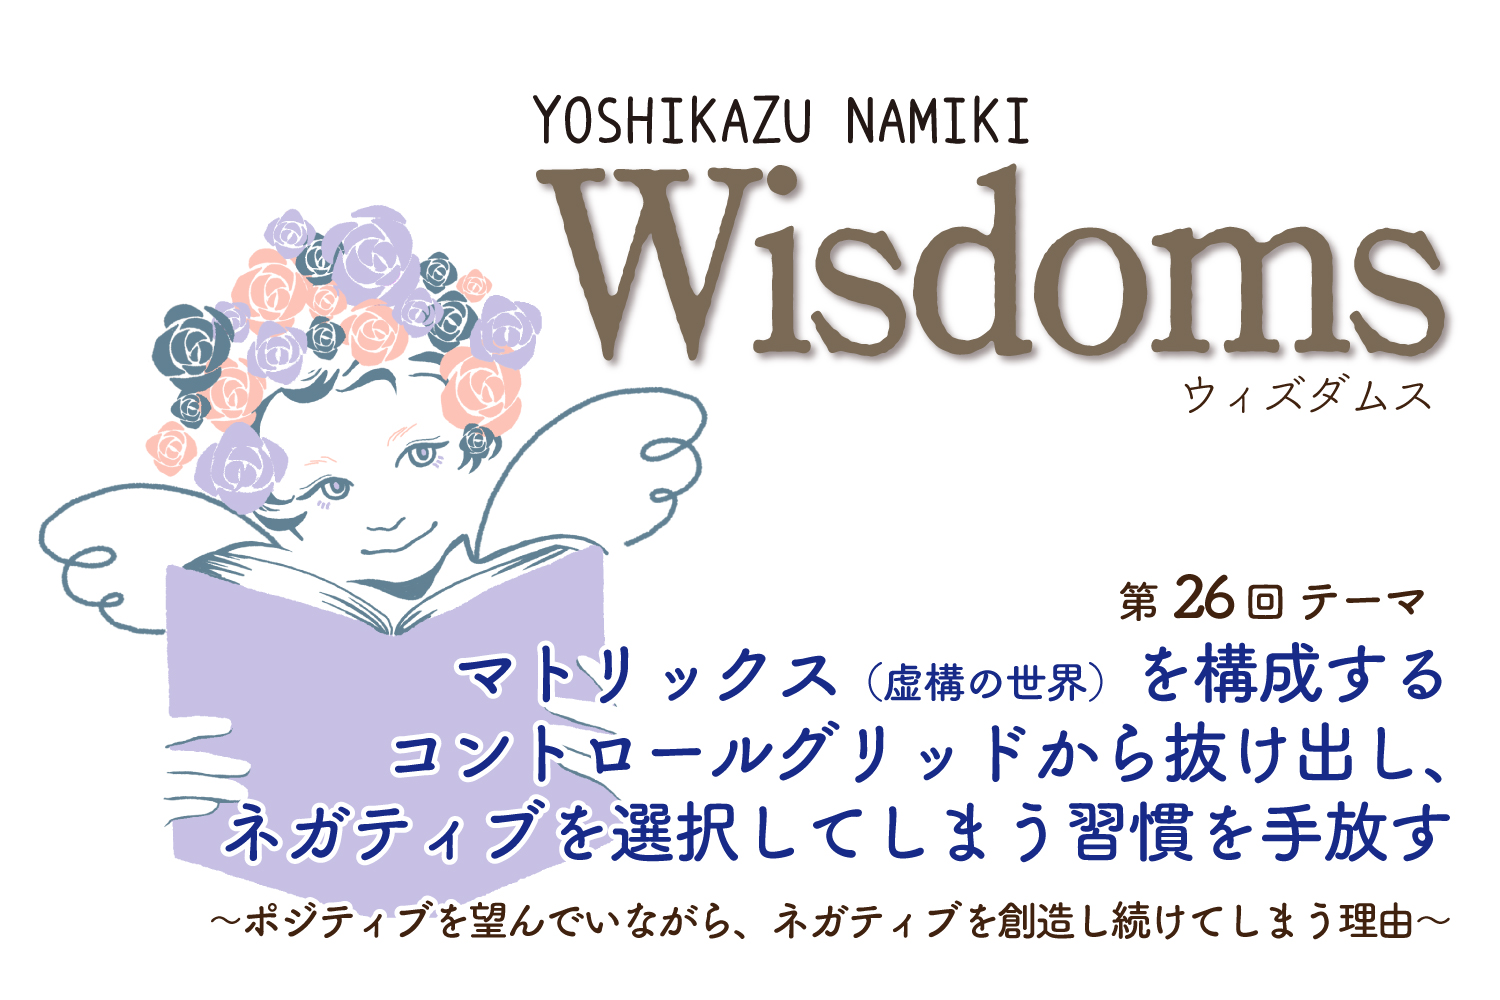 Wisdoms202305